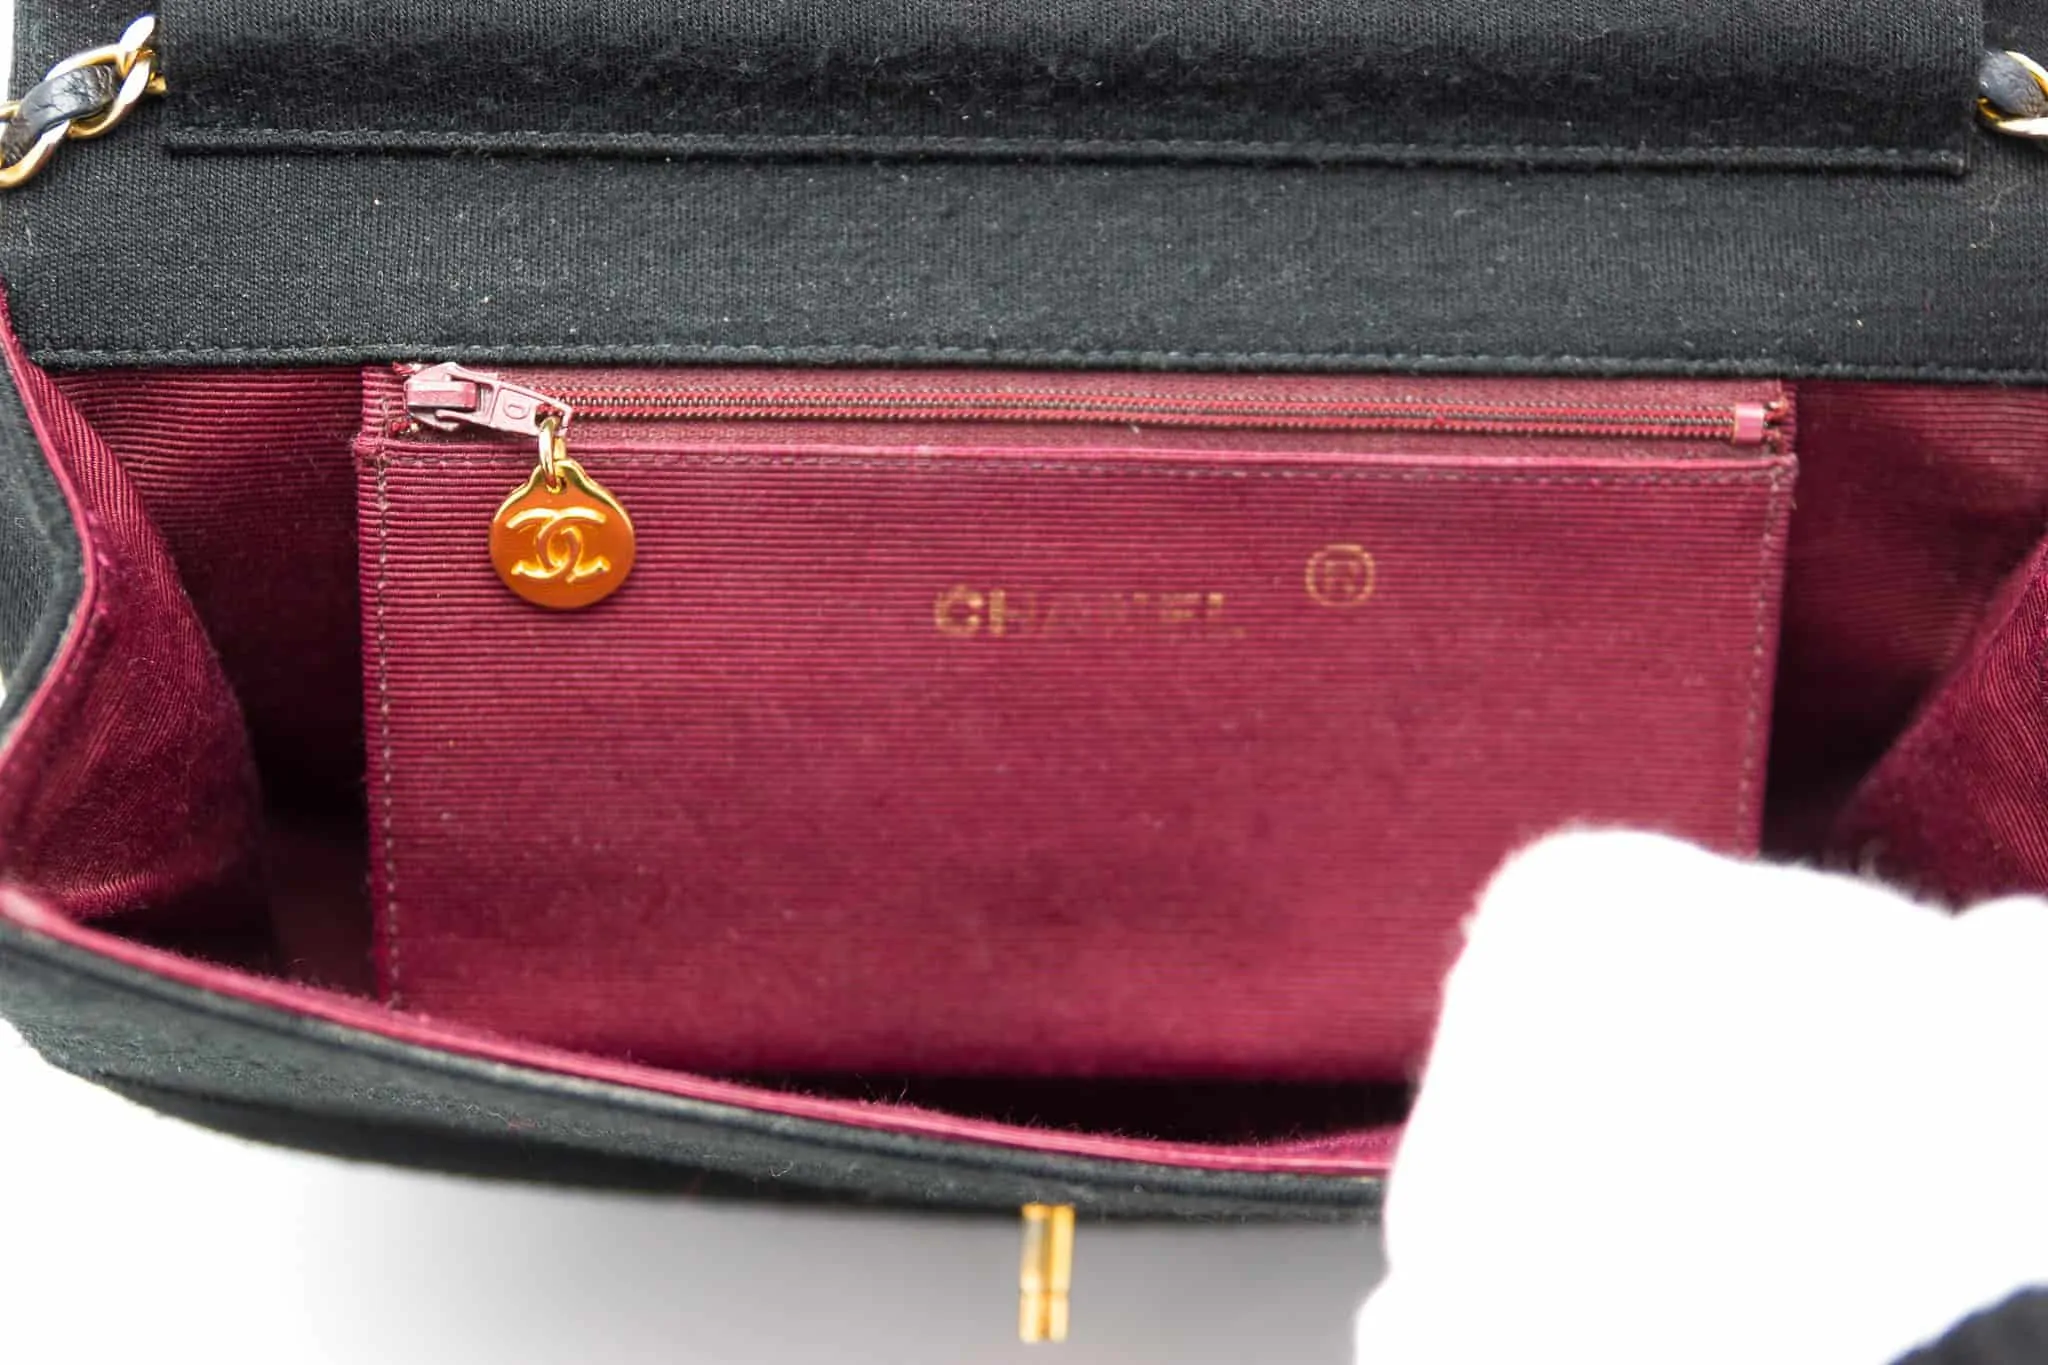 Van Cleef & Arpels rare vintage clutch bag 70s - Katheley's